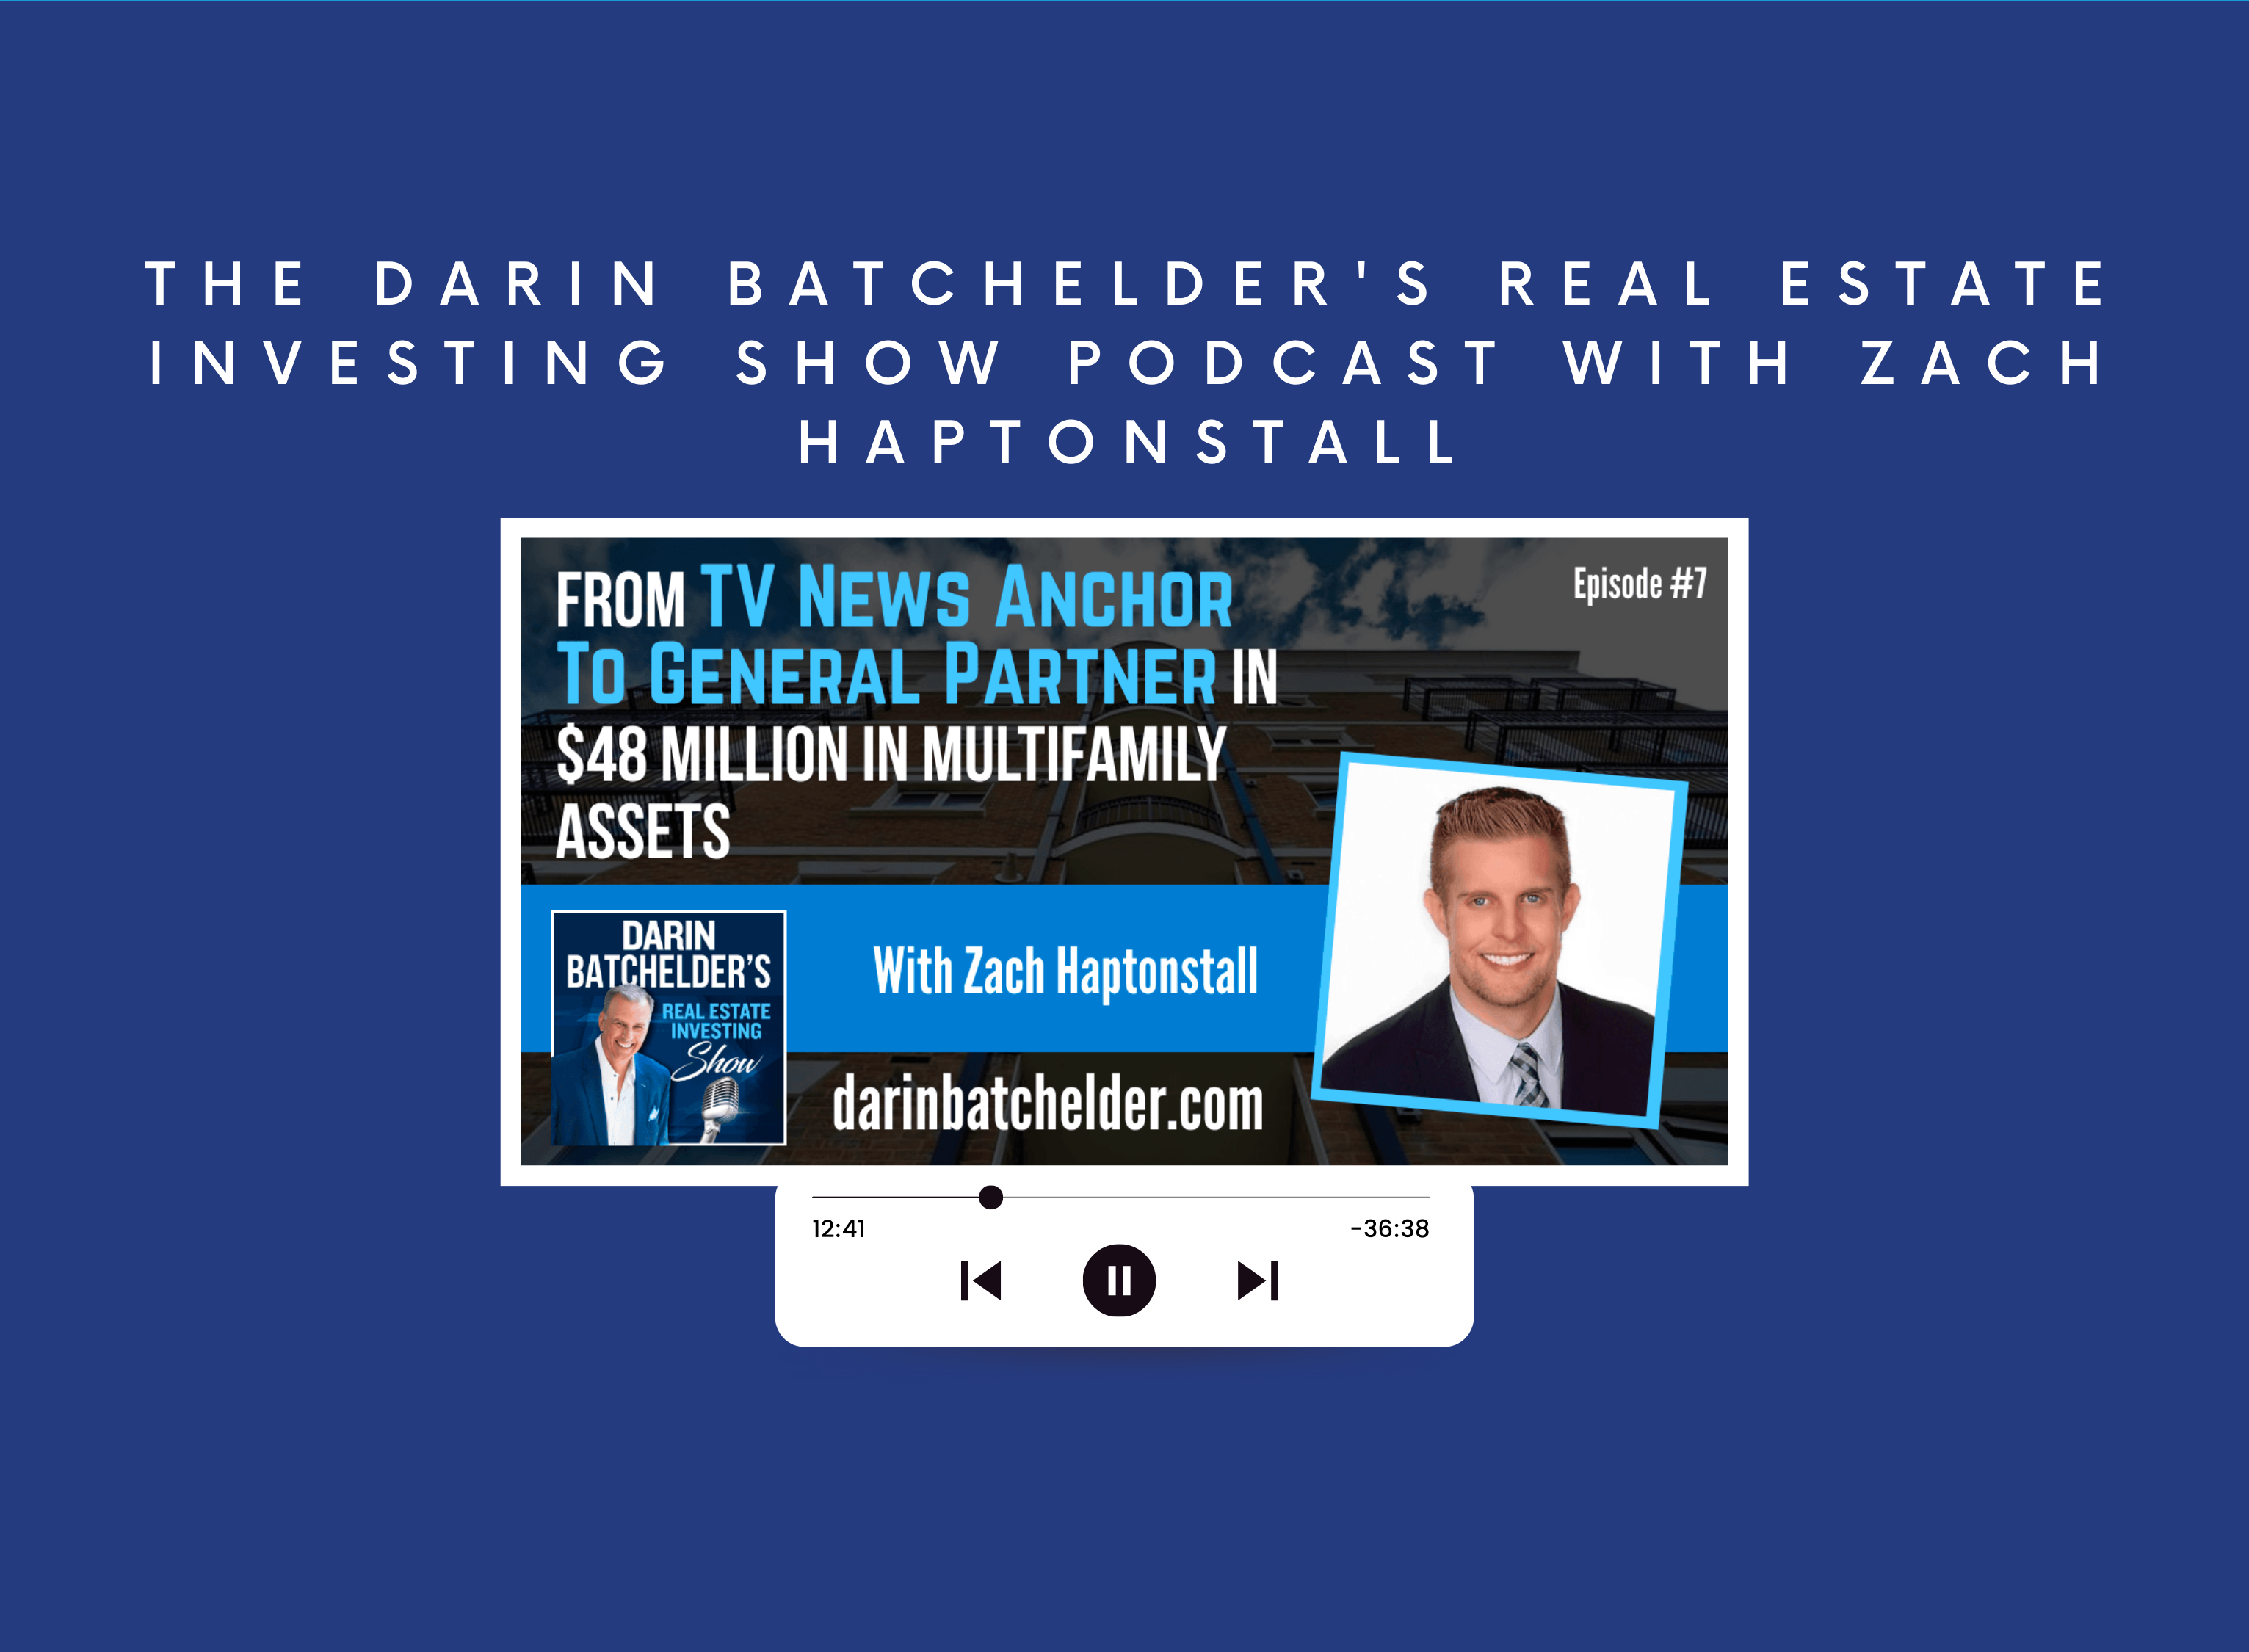 The Darin Batchelder's Real Estate Investing Show